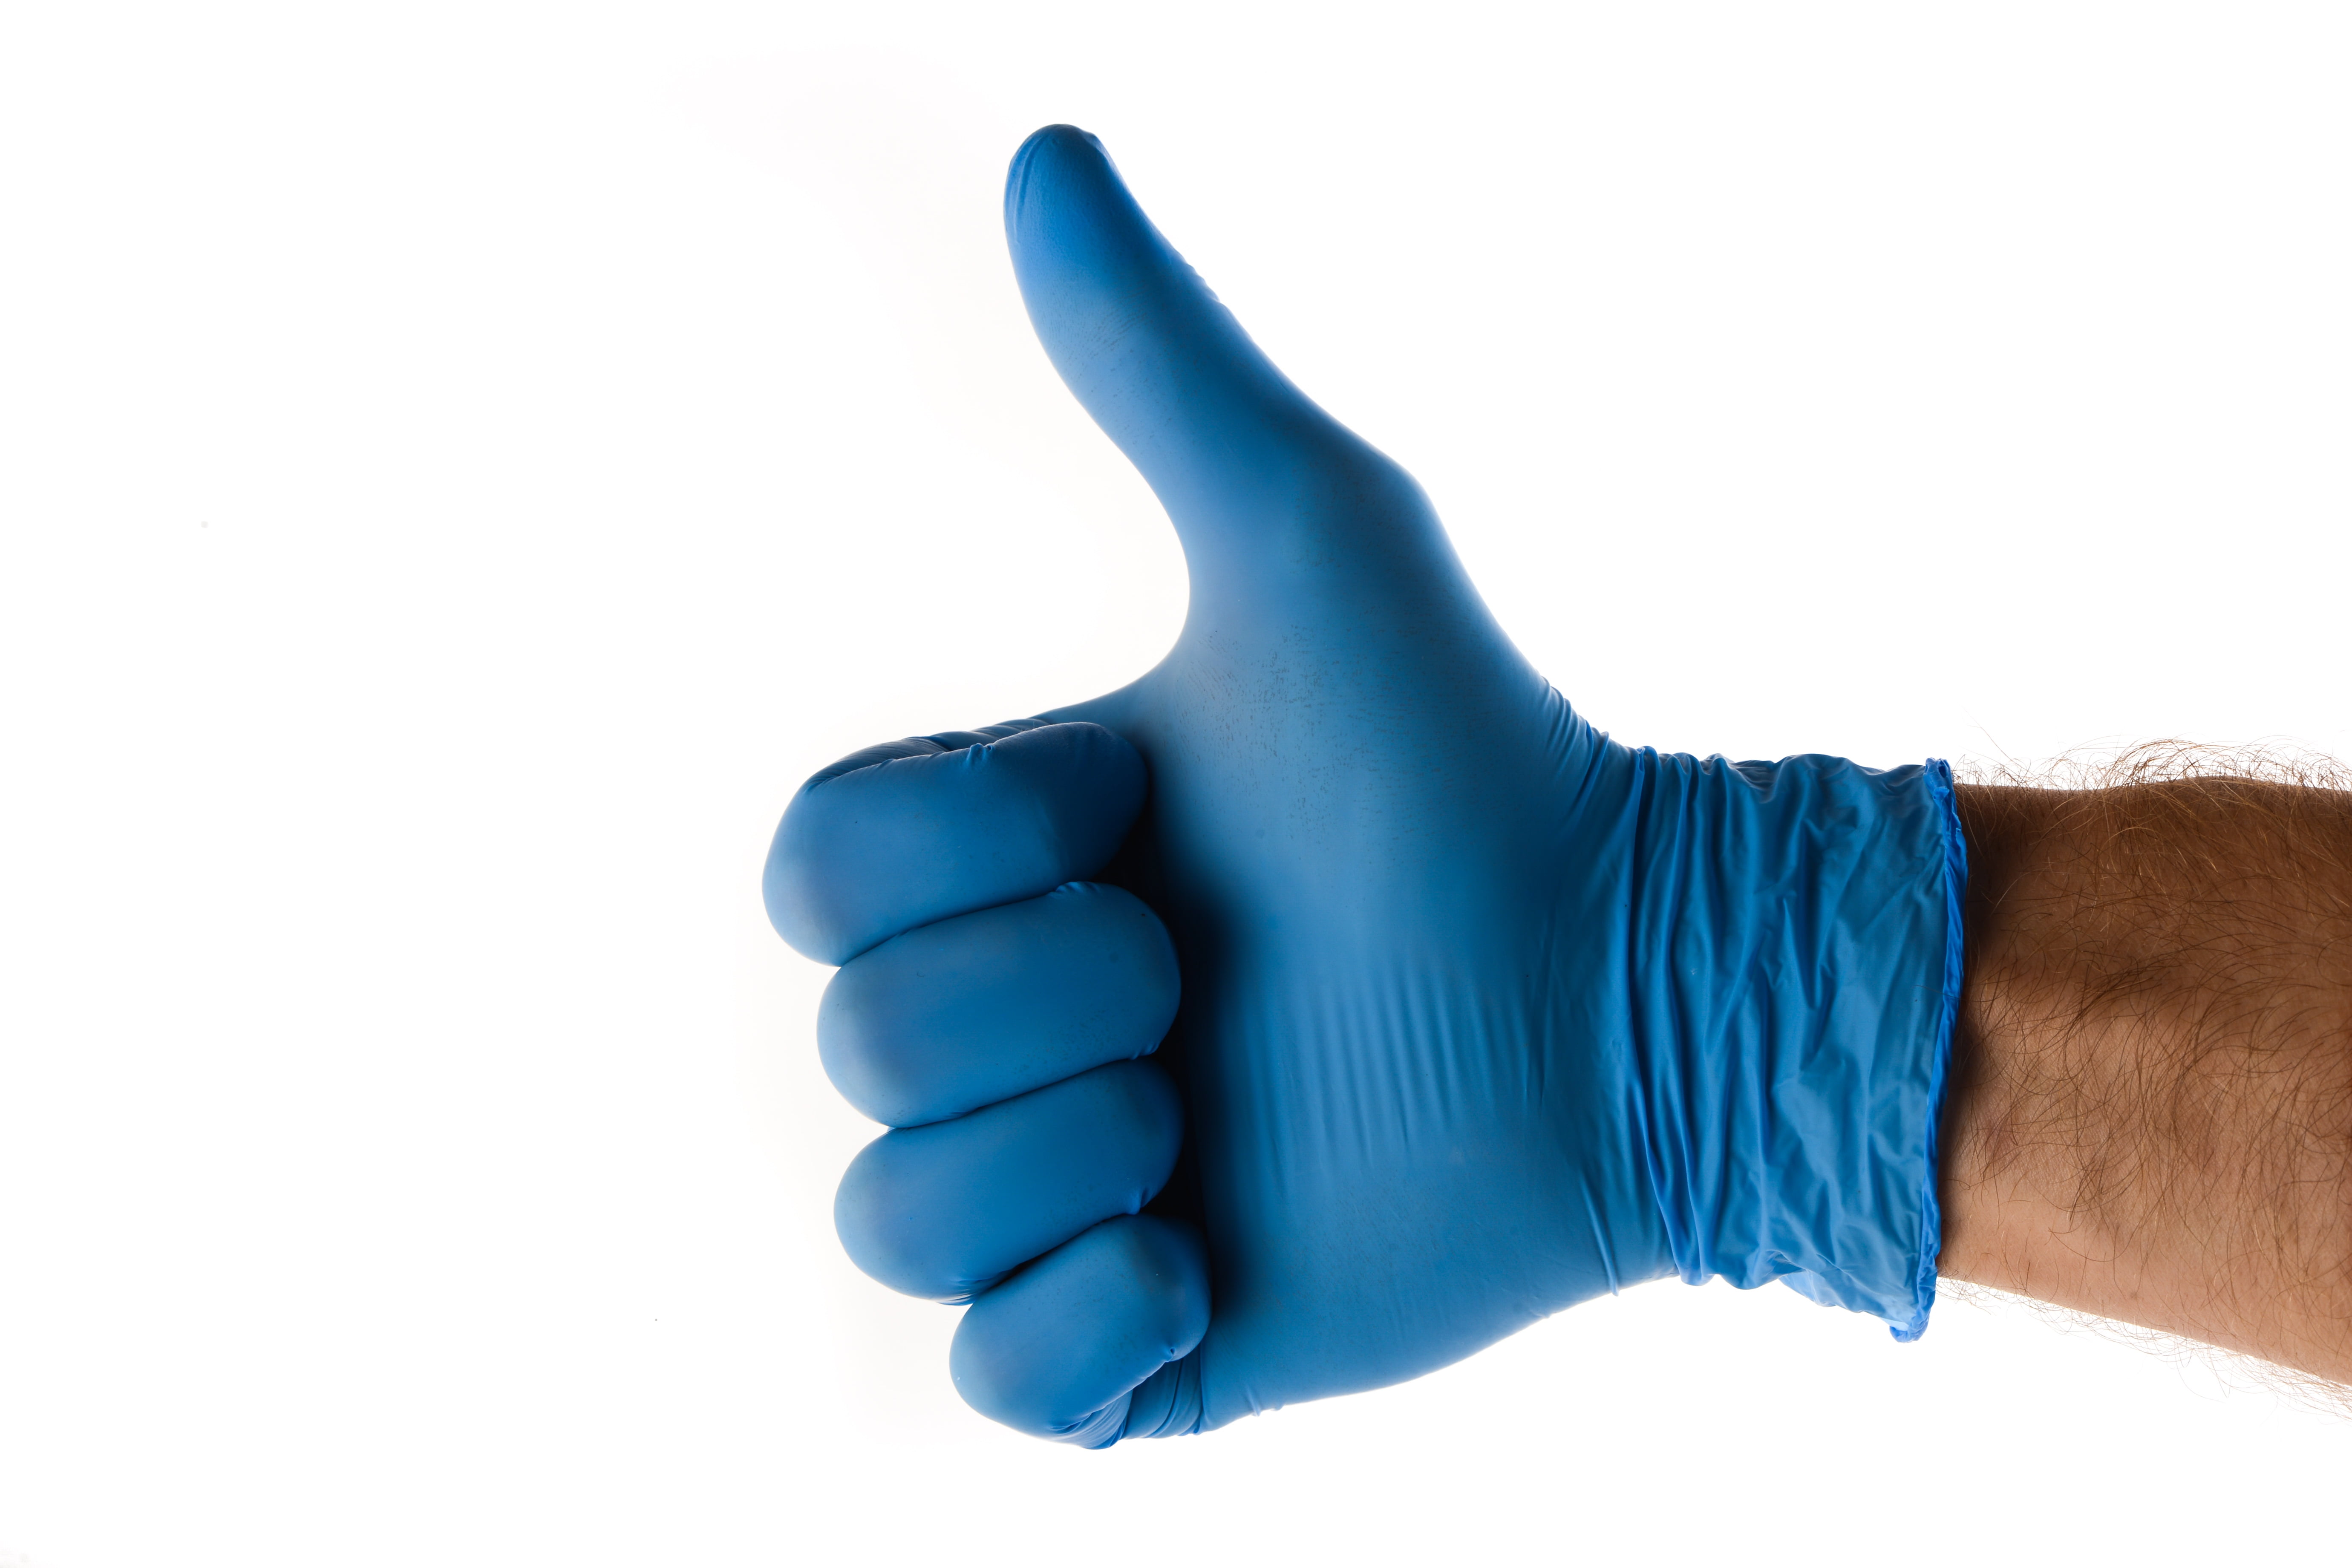 Medium 300pcs Disposable Powder-Free Latex Medical Exam Gloves Nitrile Free